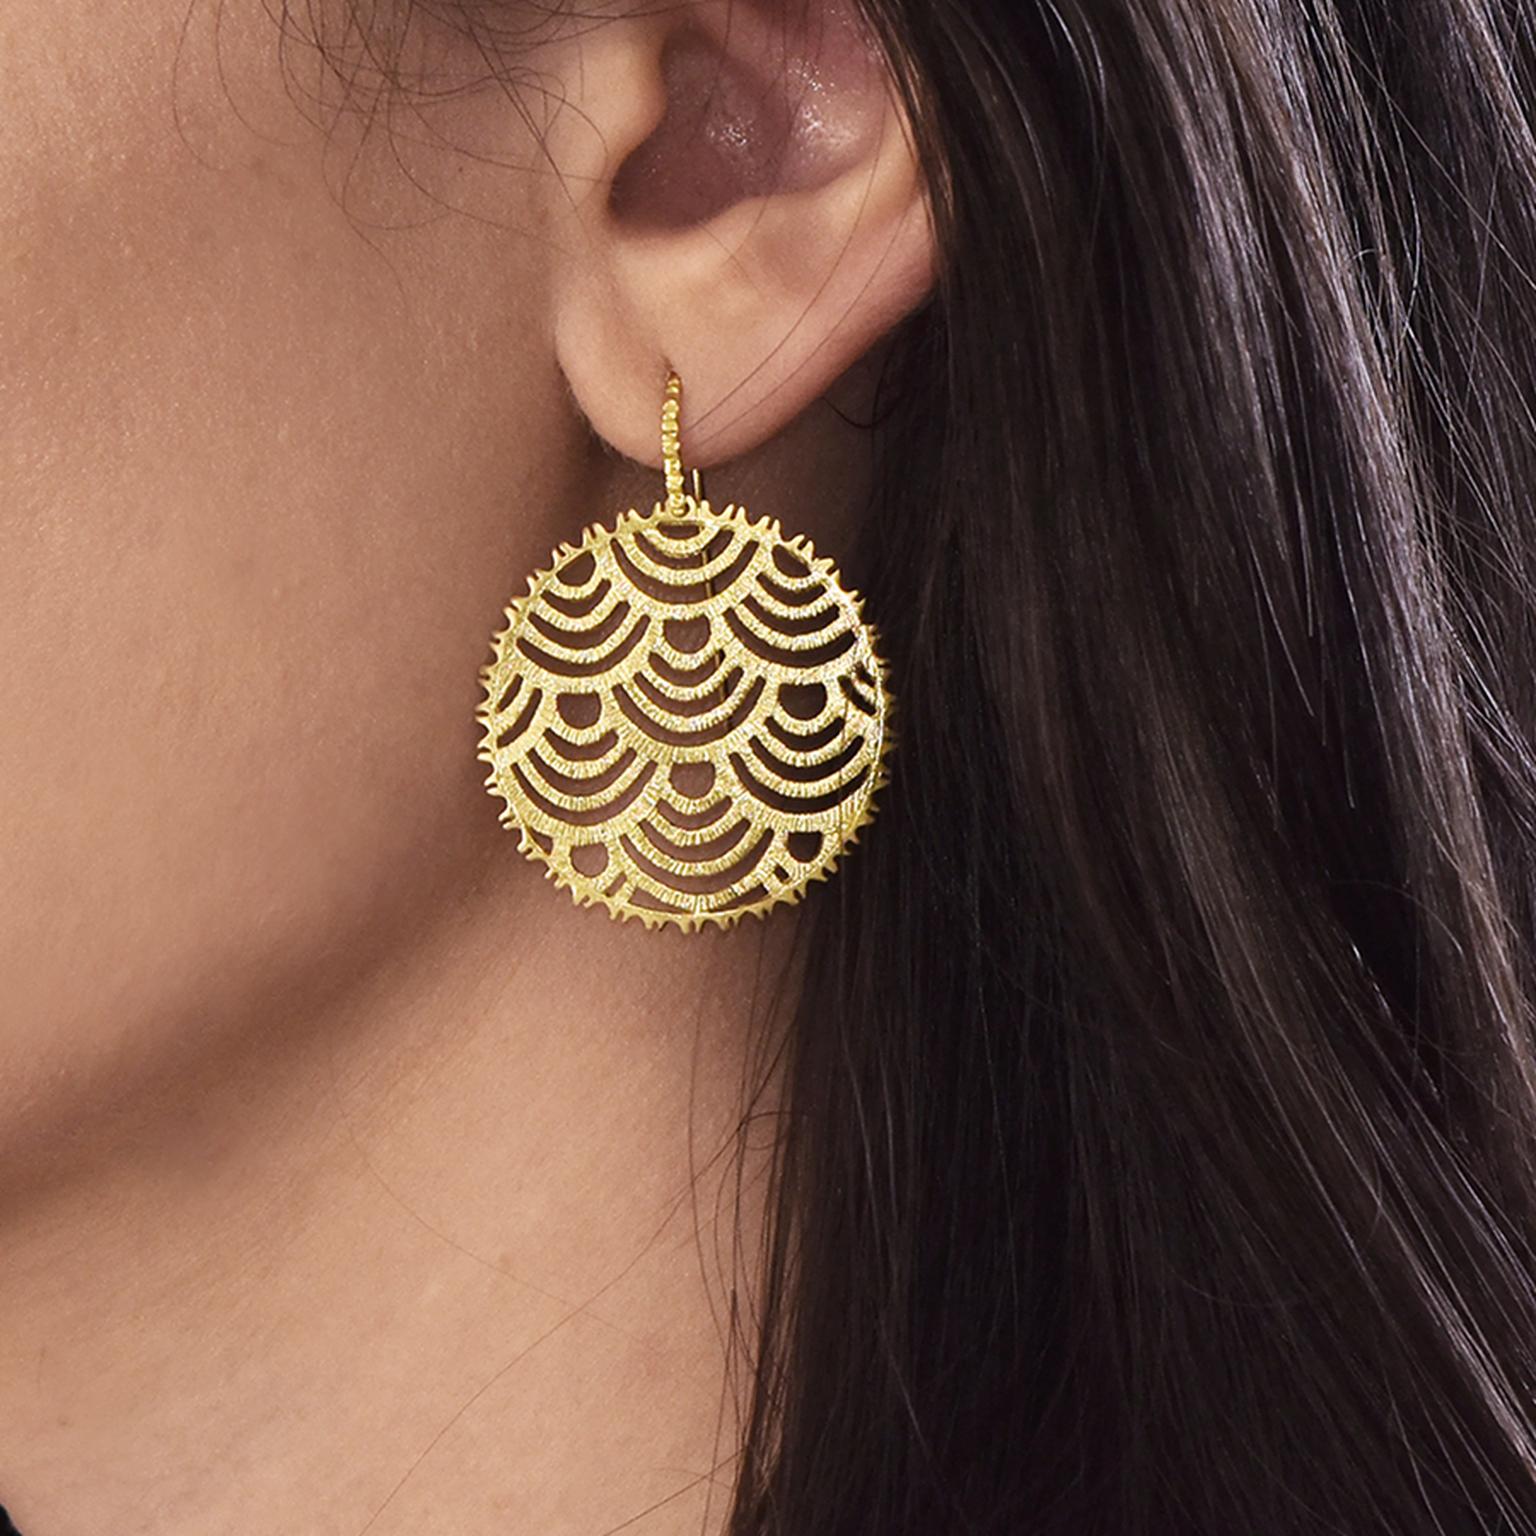 Nubia earrings on model by Lalaounis